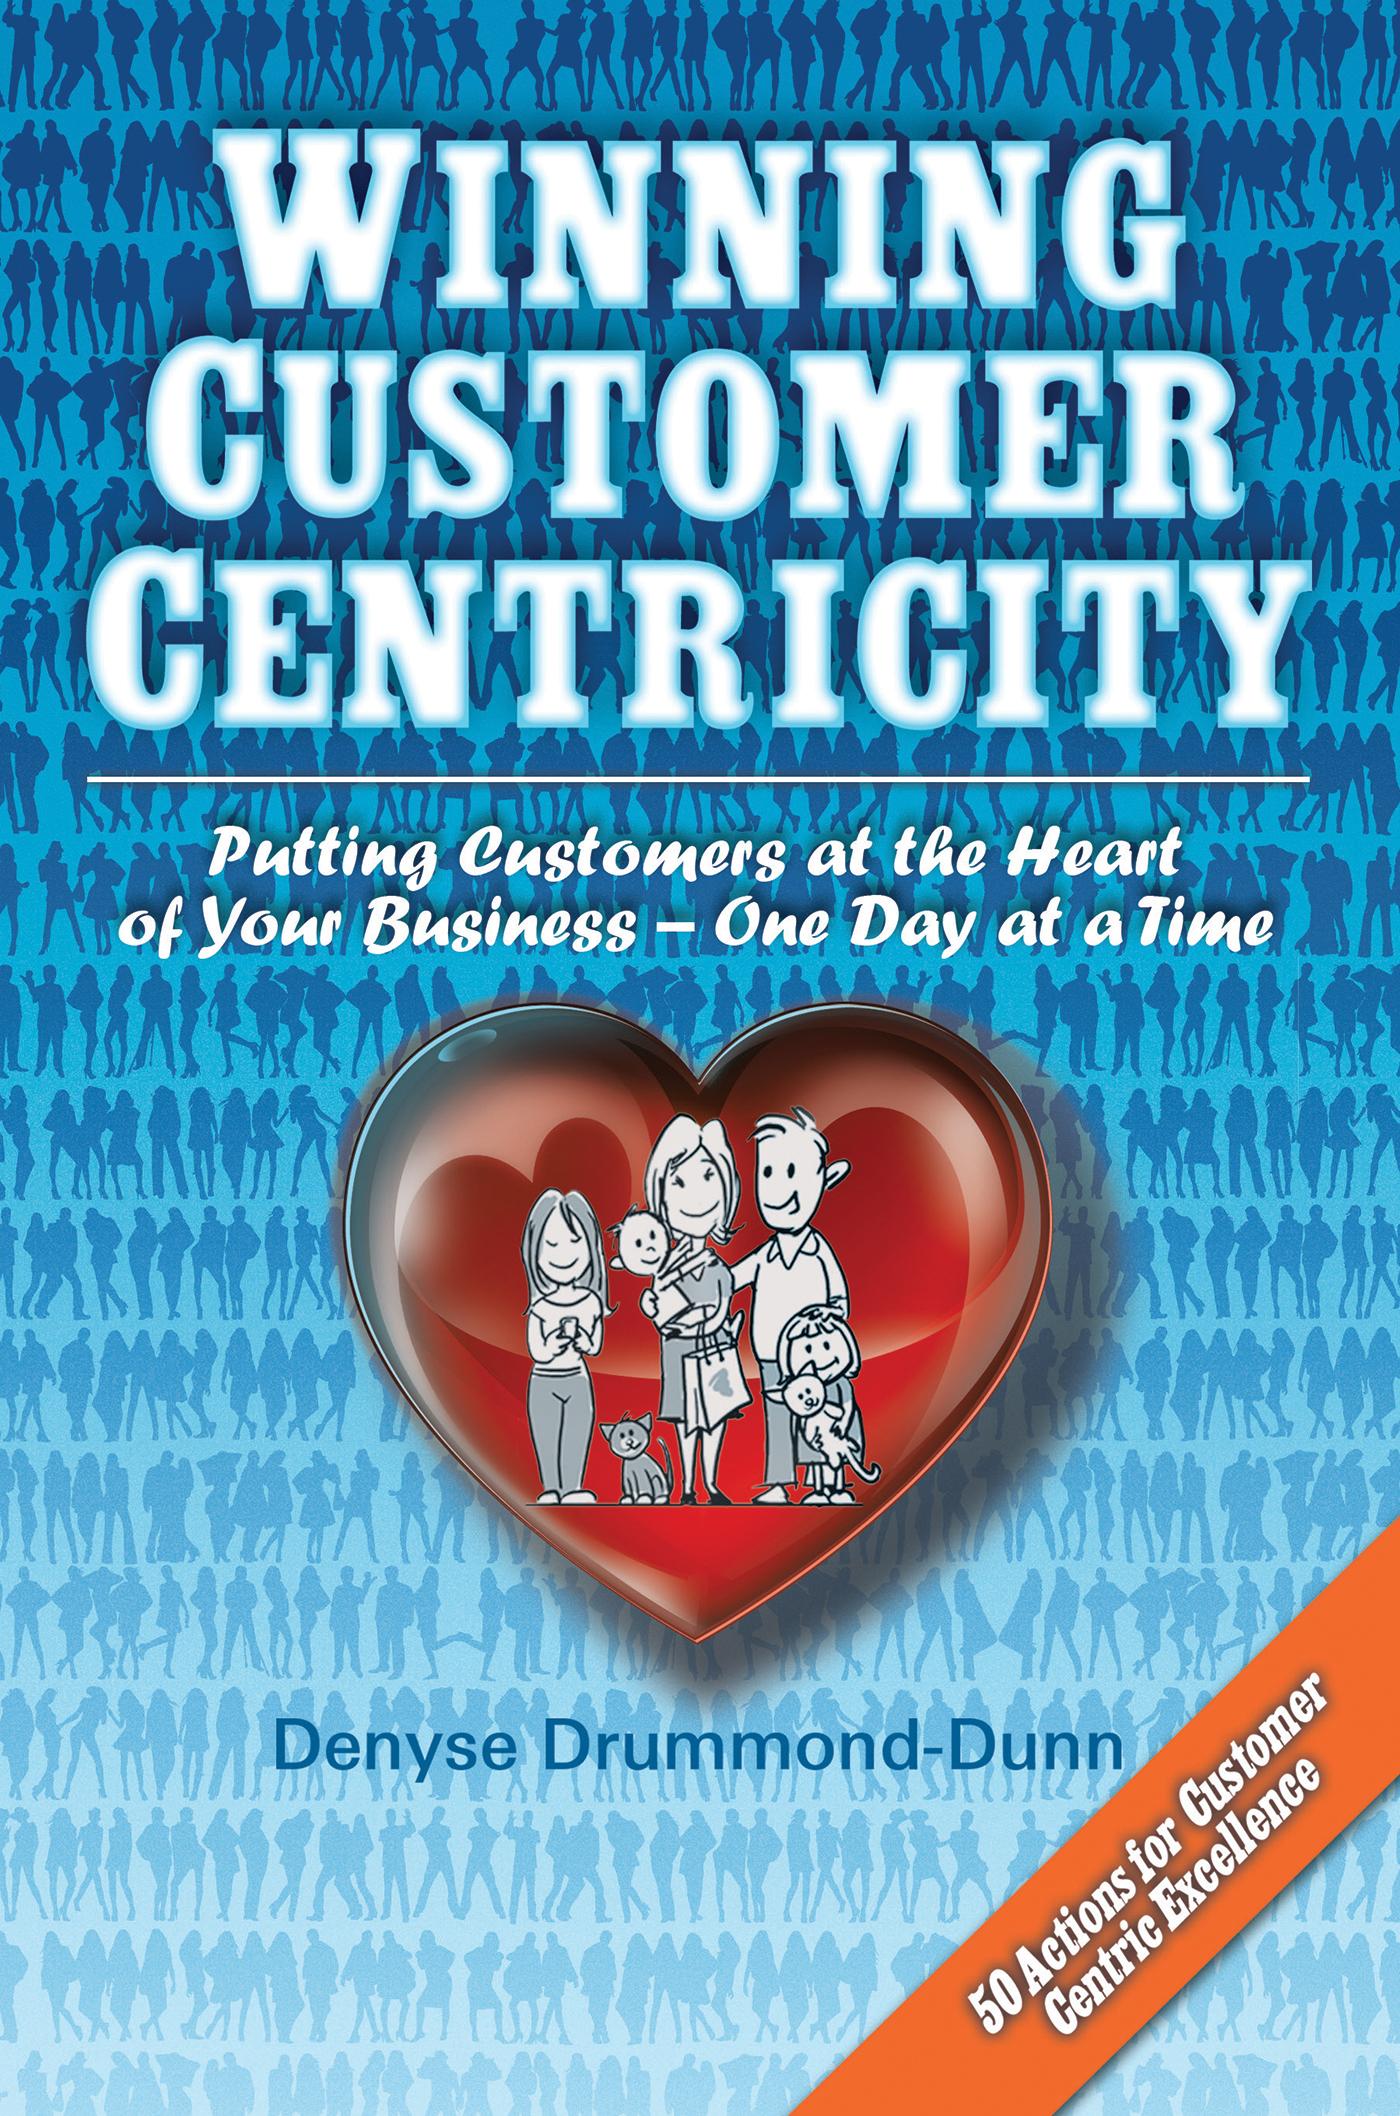 Winning Customer Centricity